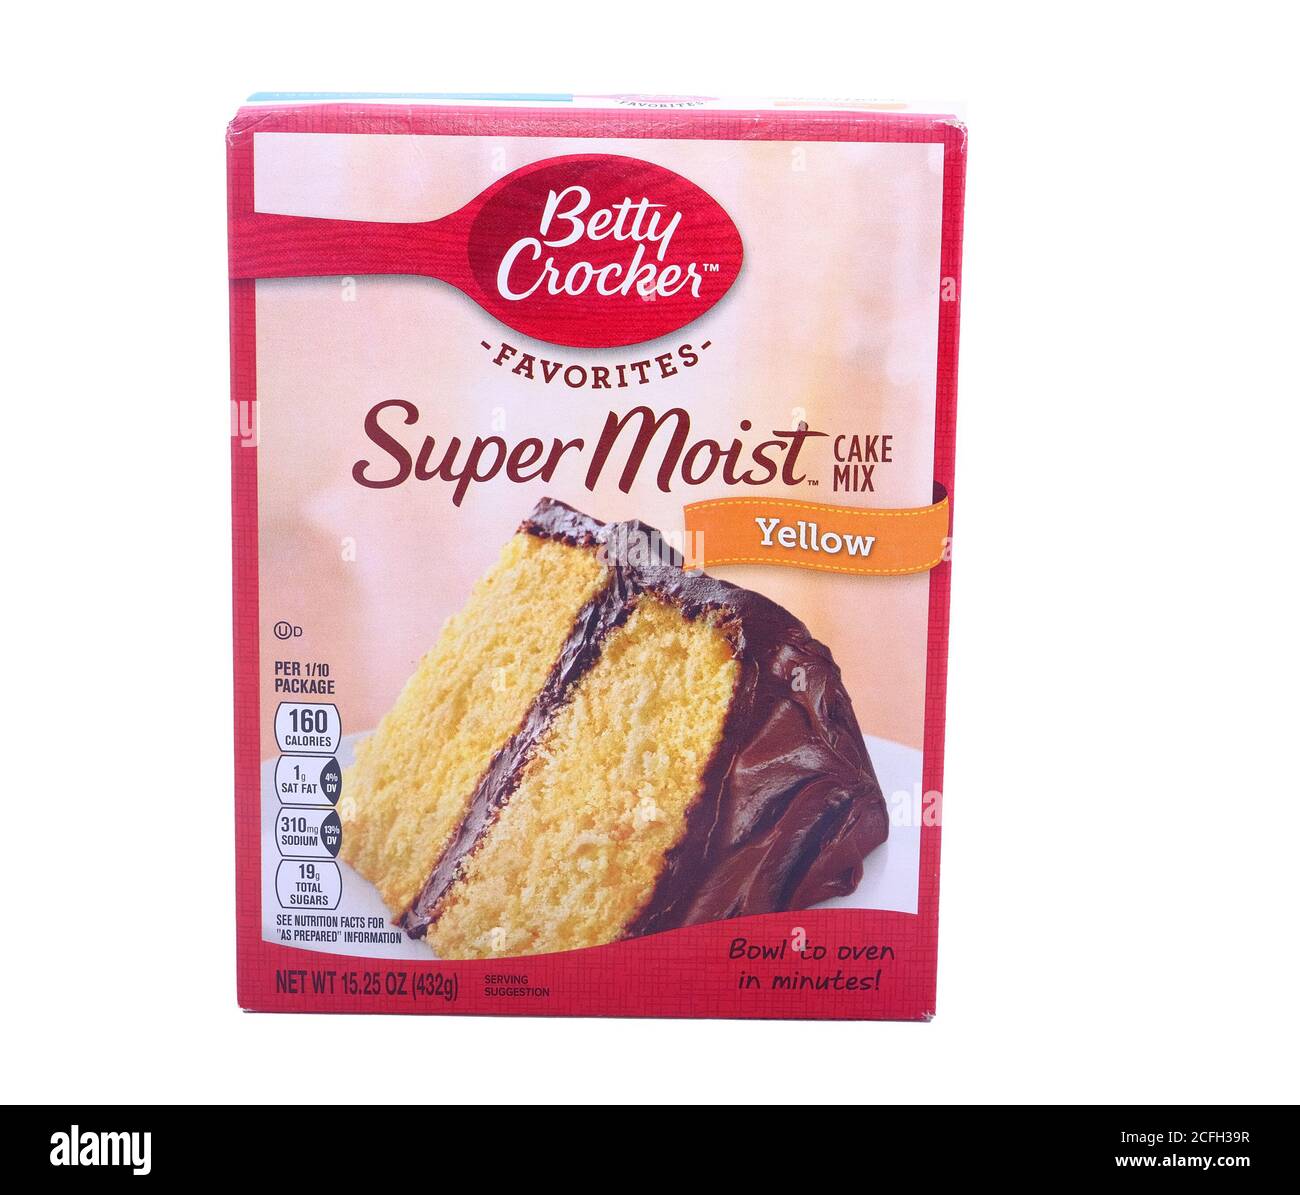 betty-crocker-cake-wholesale-cheapest-save-49-jlcatj-gob-mx